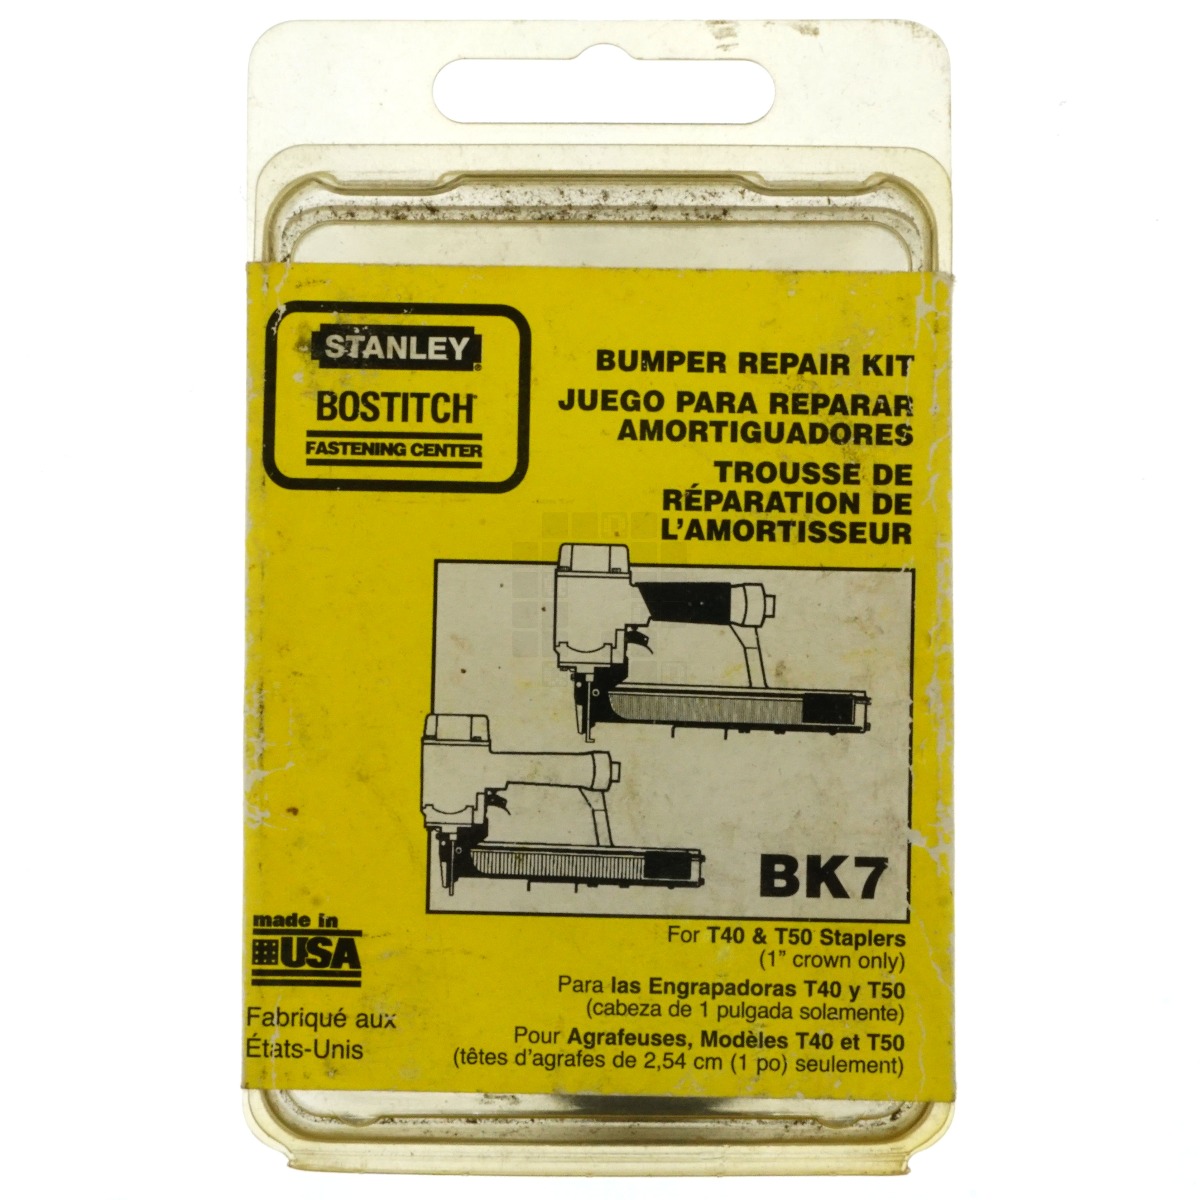 Stanley Bostitch BK7 Bumper Repair Kit, for T40 / T50 Staplers